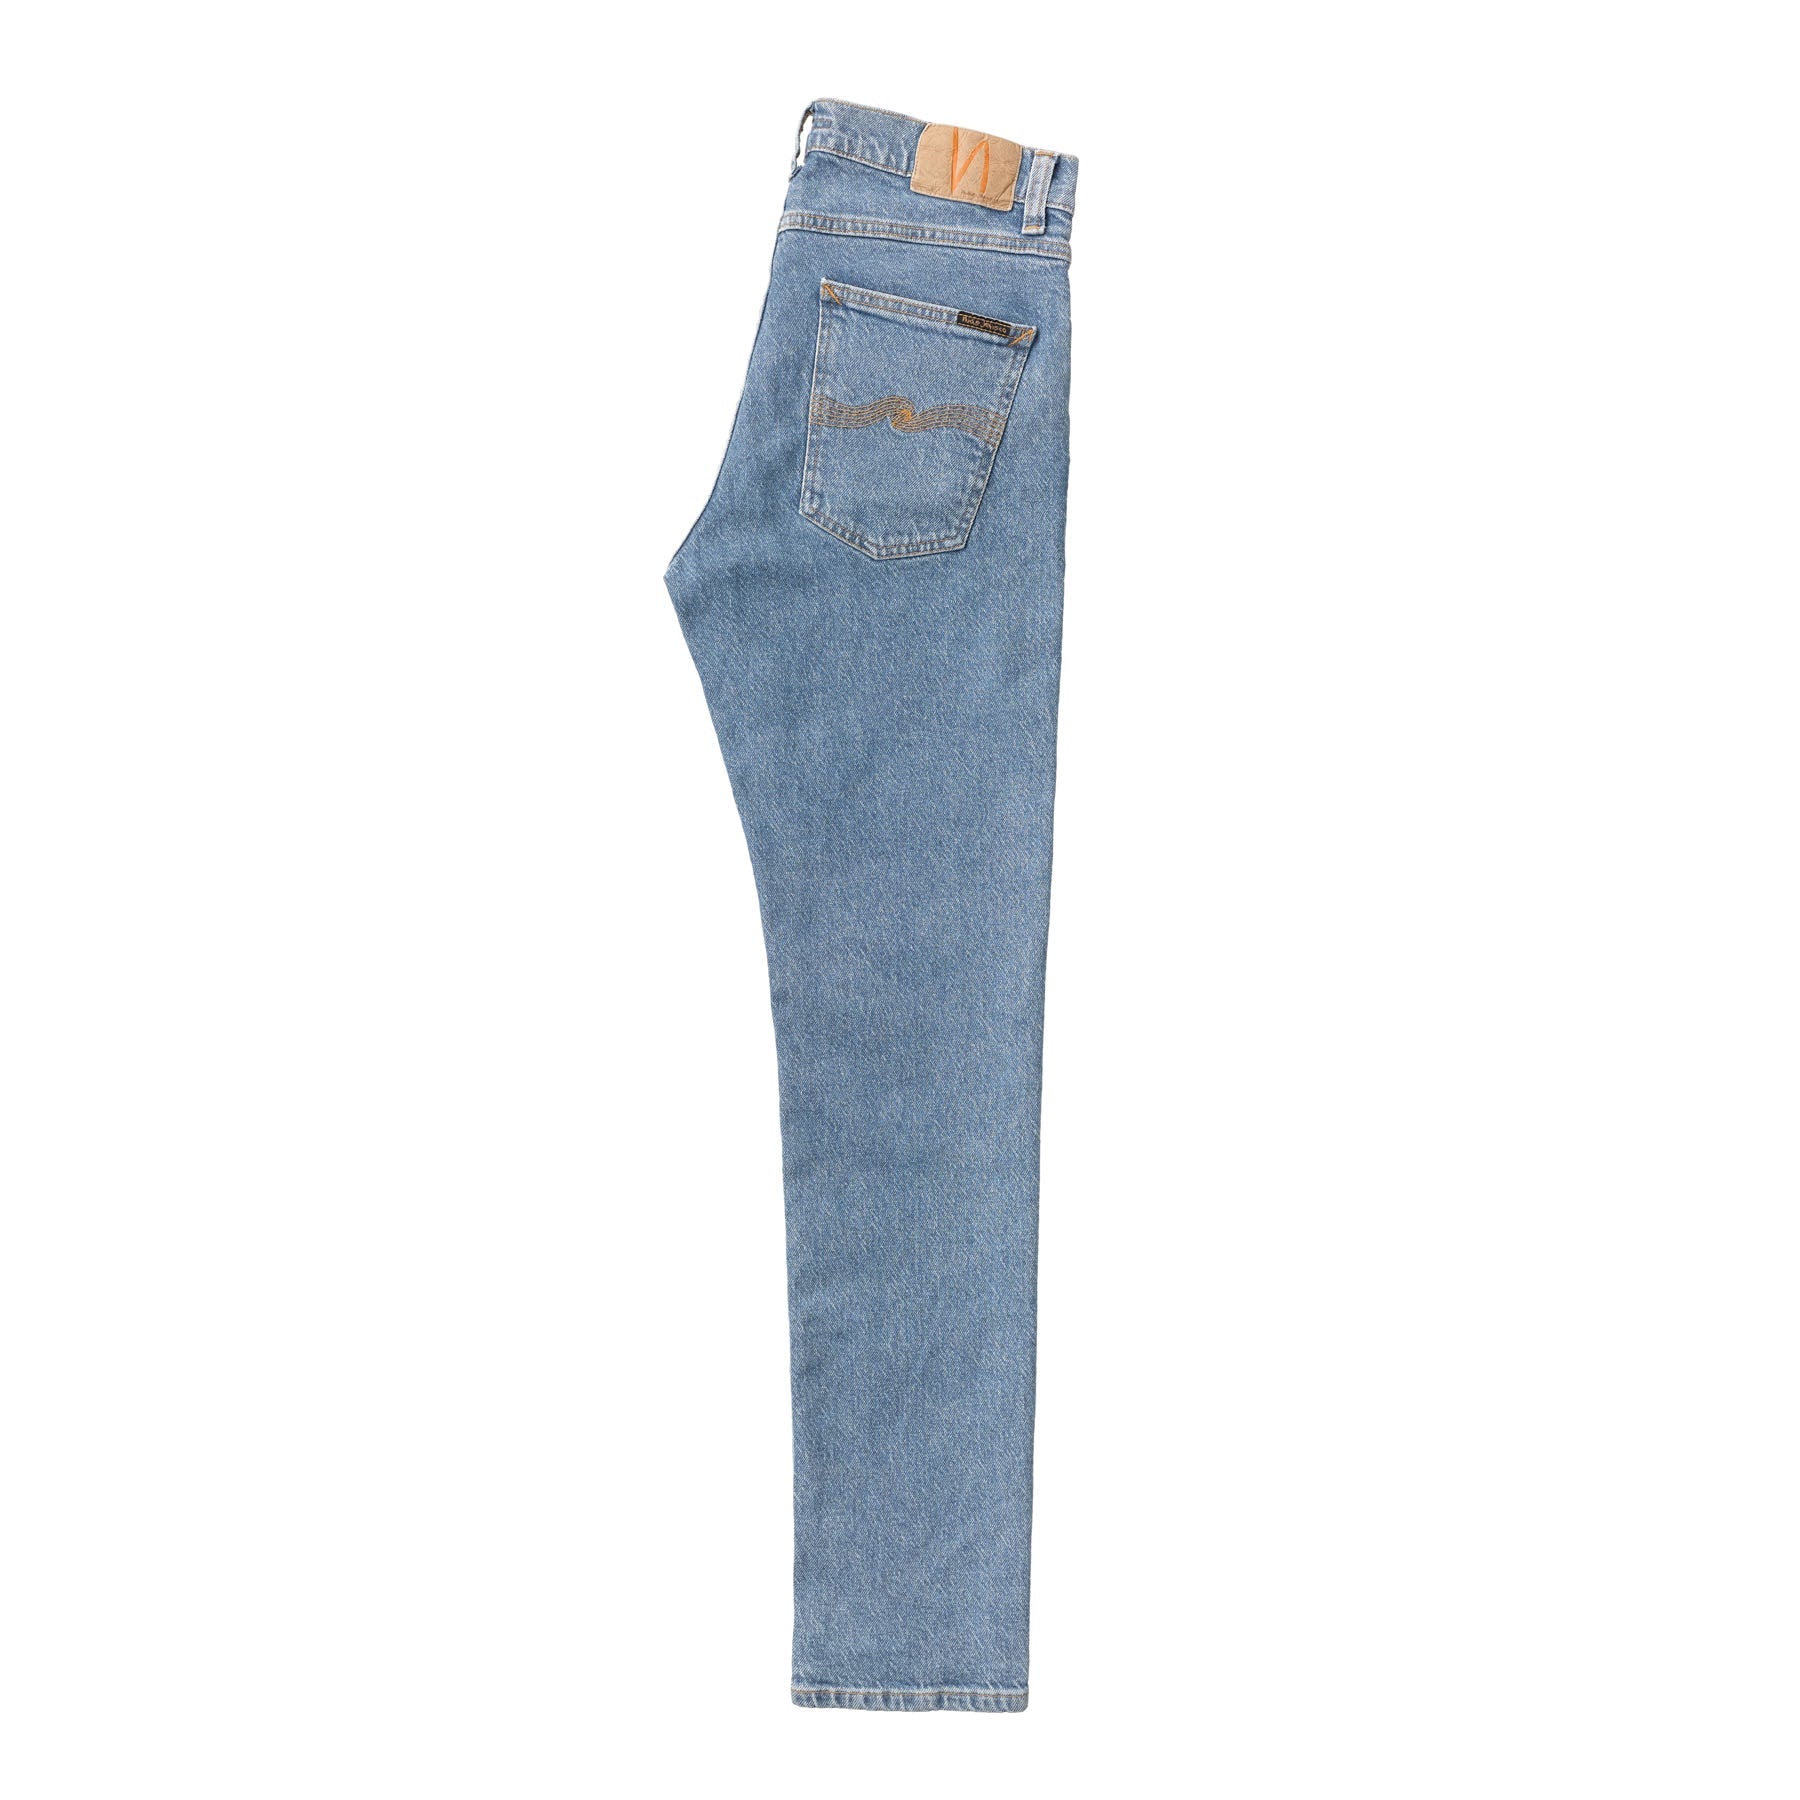 Lean Dean Vintage Touch - Nudie Jeans - Danali - 113894-30/32